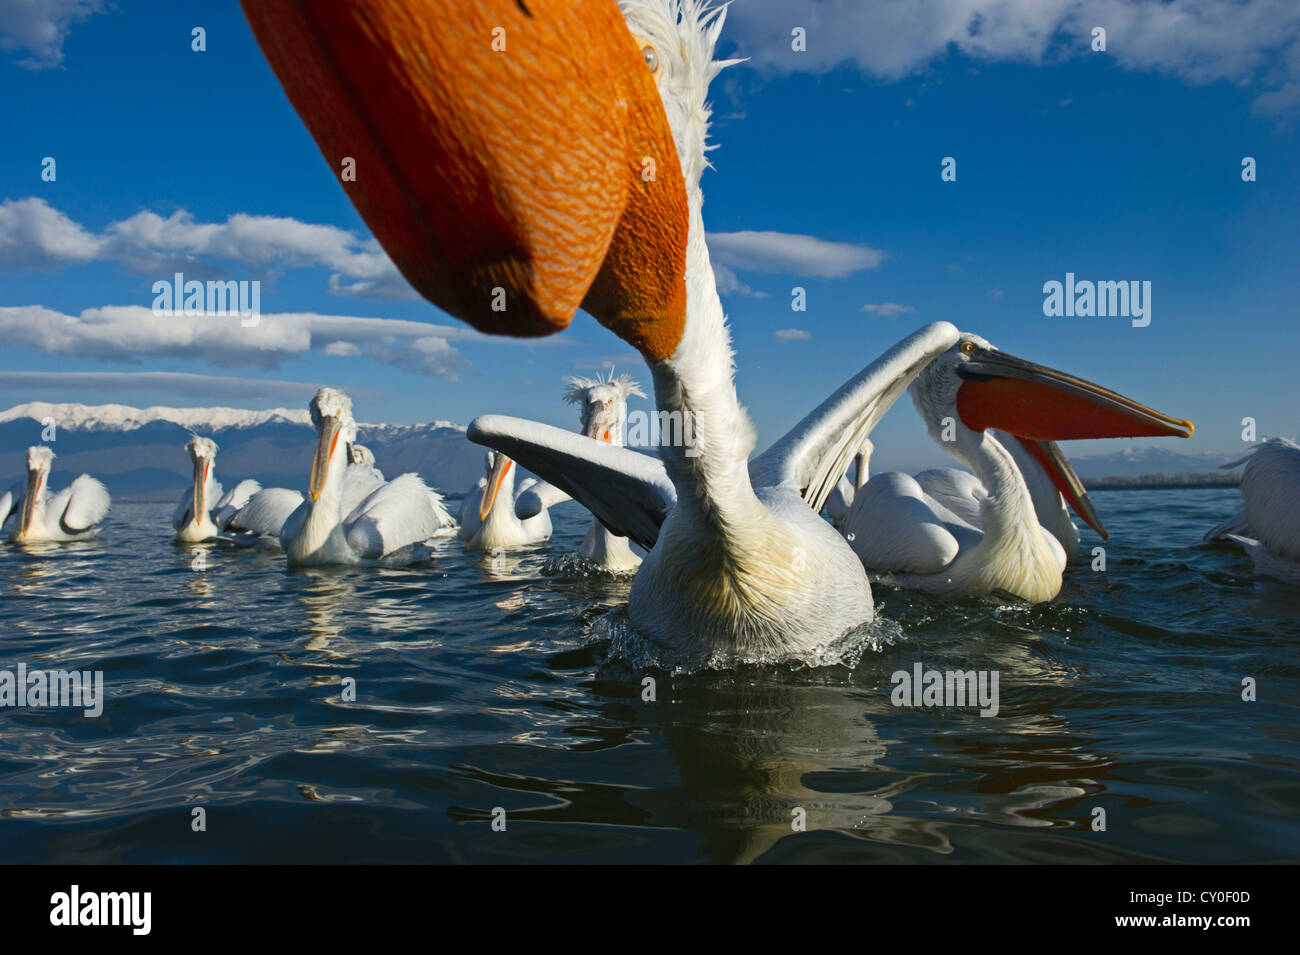 Dalmatinische Pelikane Pelicanus Cristatus Februar von Angler am See Kerkini Nordgriechenland gefüttert Stockfoto